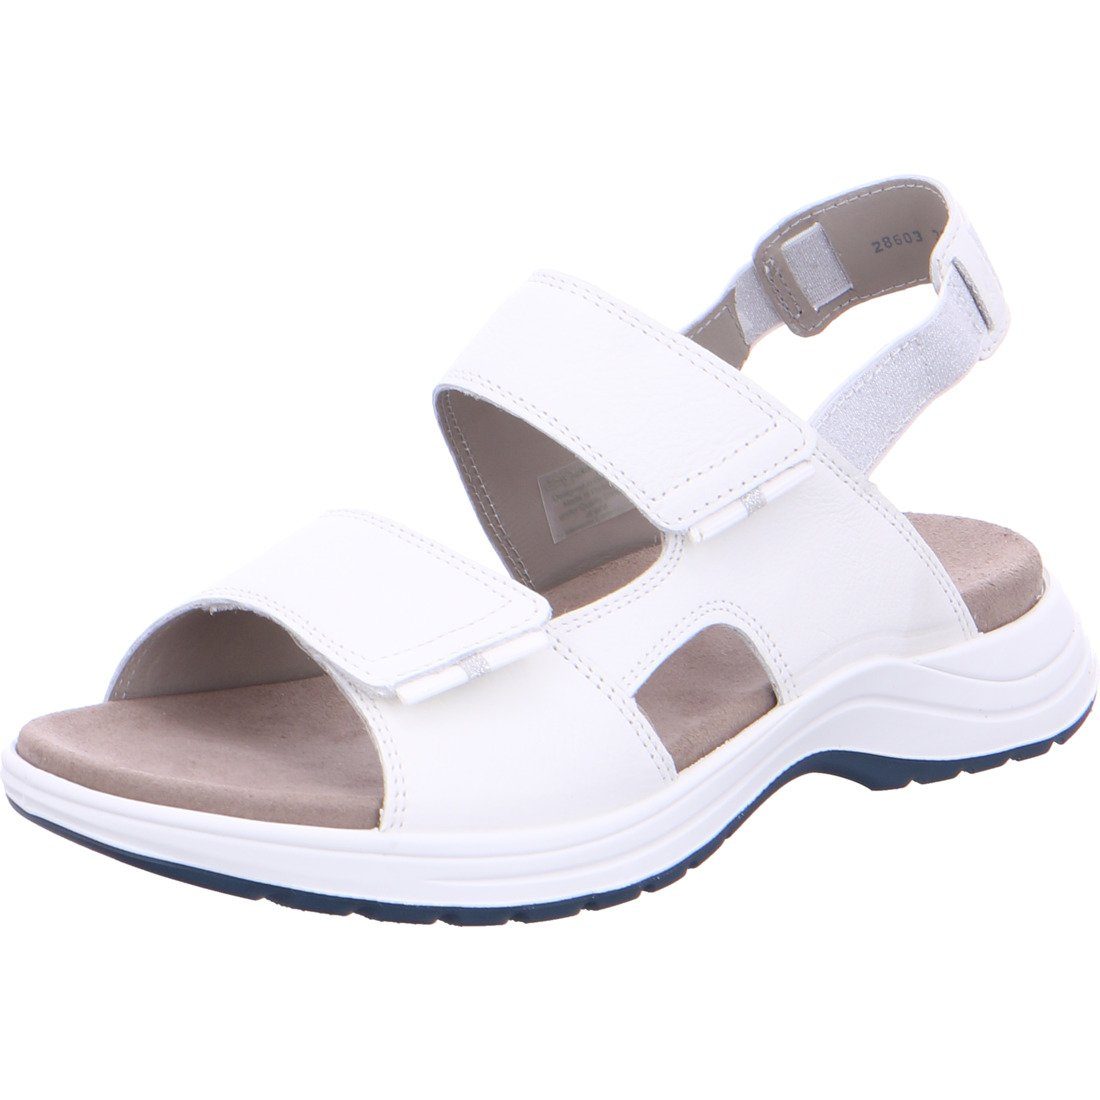 Ara Ara Schuhe, Sandalette Panama - Glattleder Sandalette weiß 042411